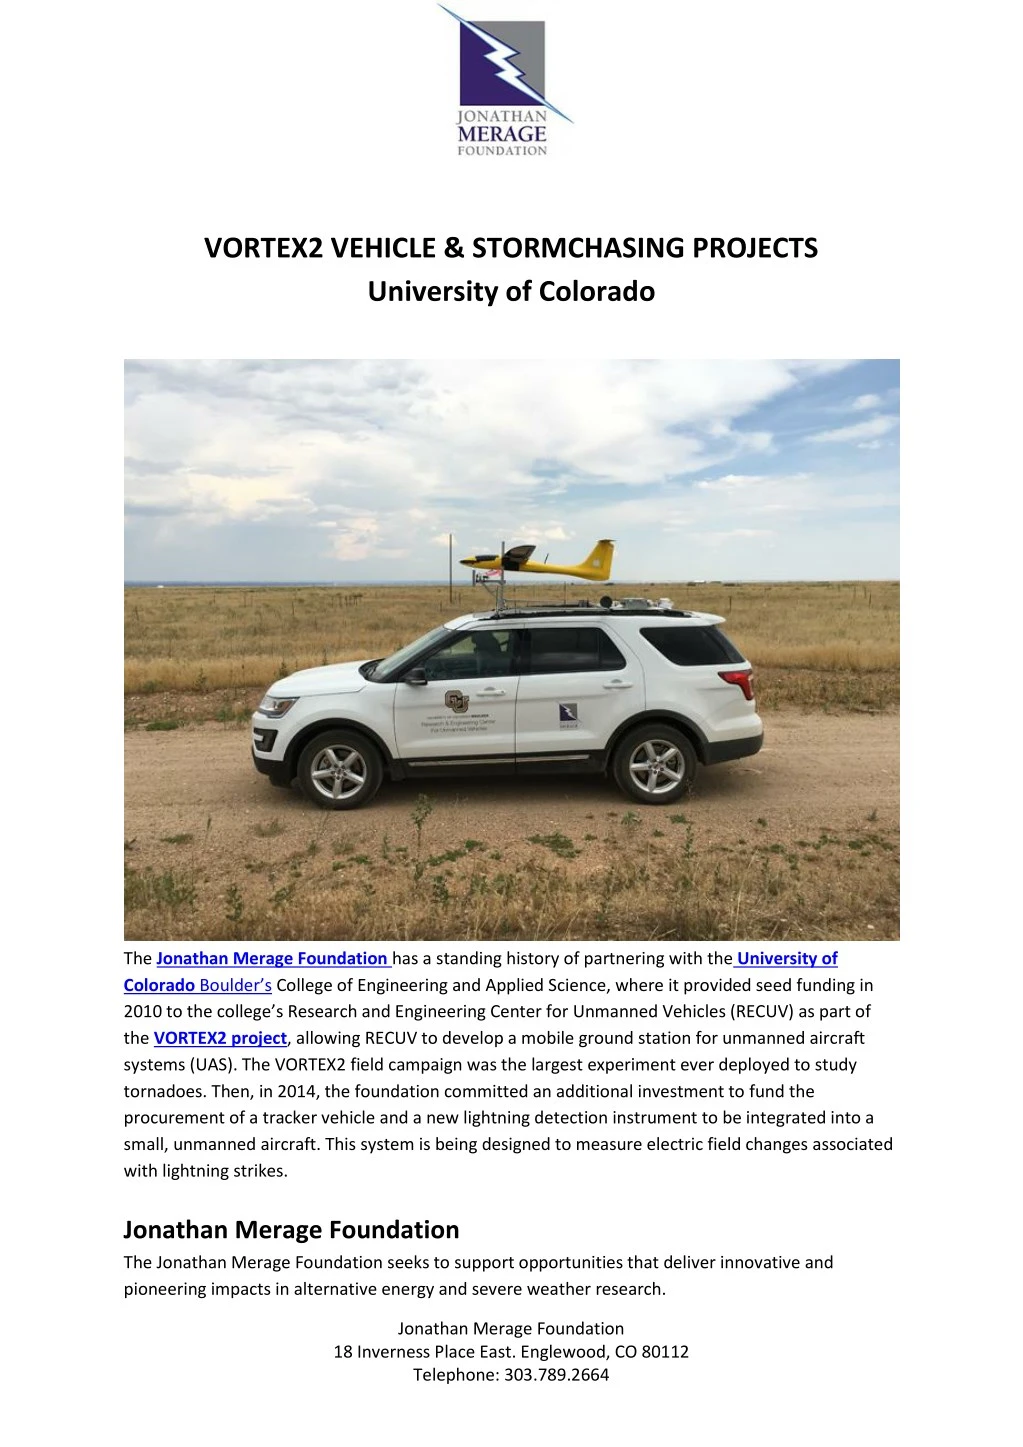 vortex2 vehicle stormchasing projects university